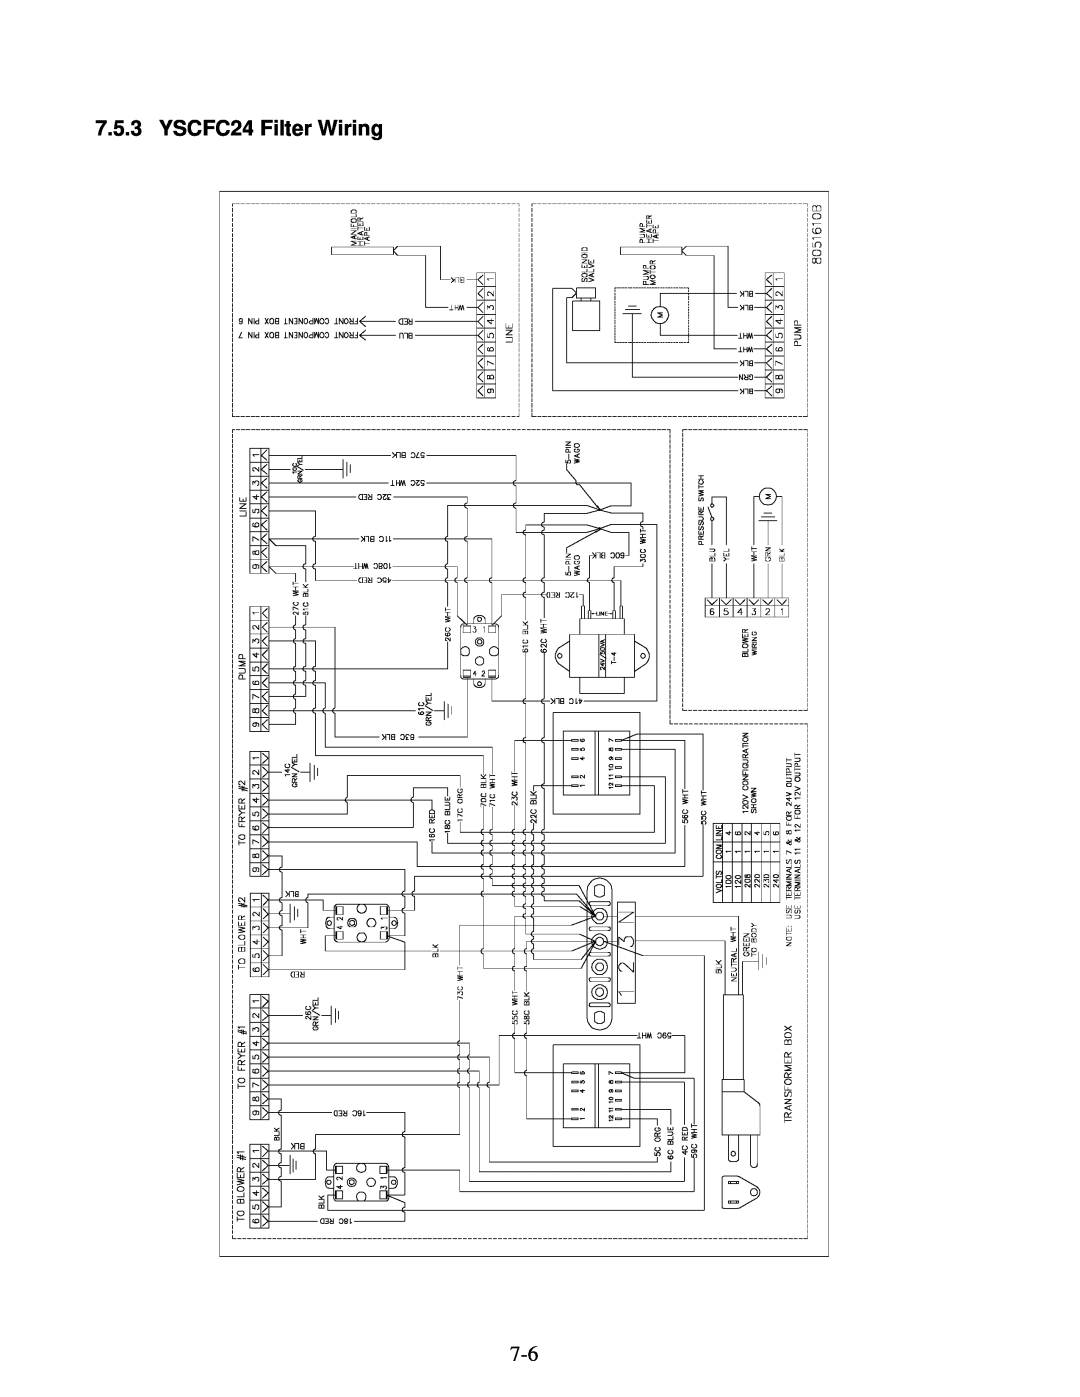 Frymaster operation manual YSCFC24 Filter Wiring 